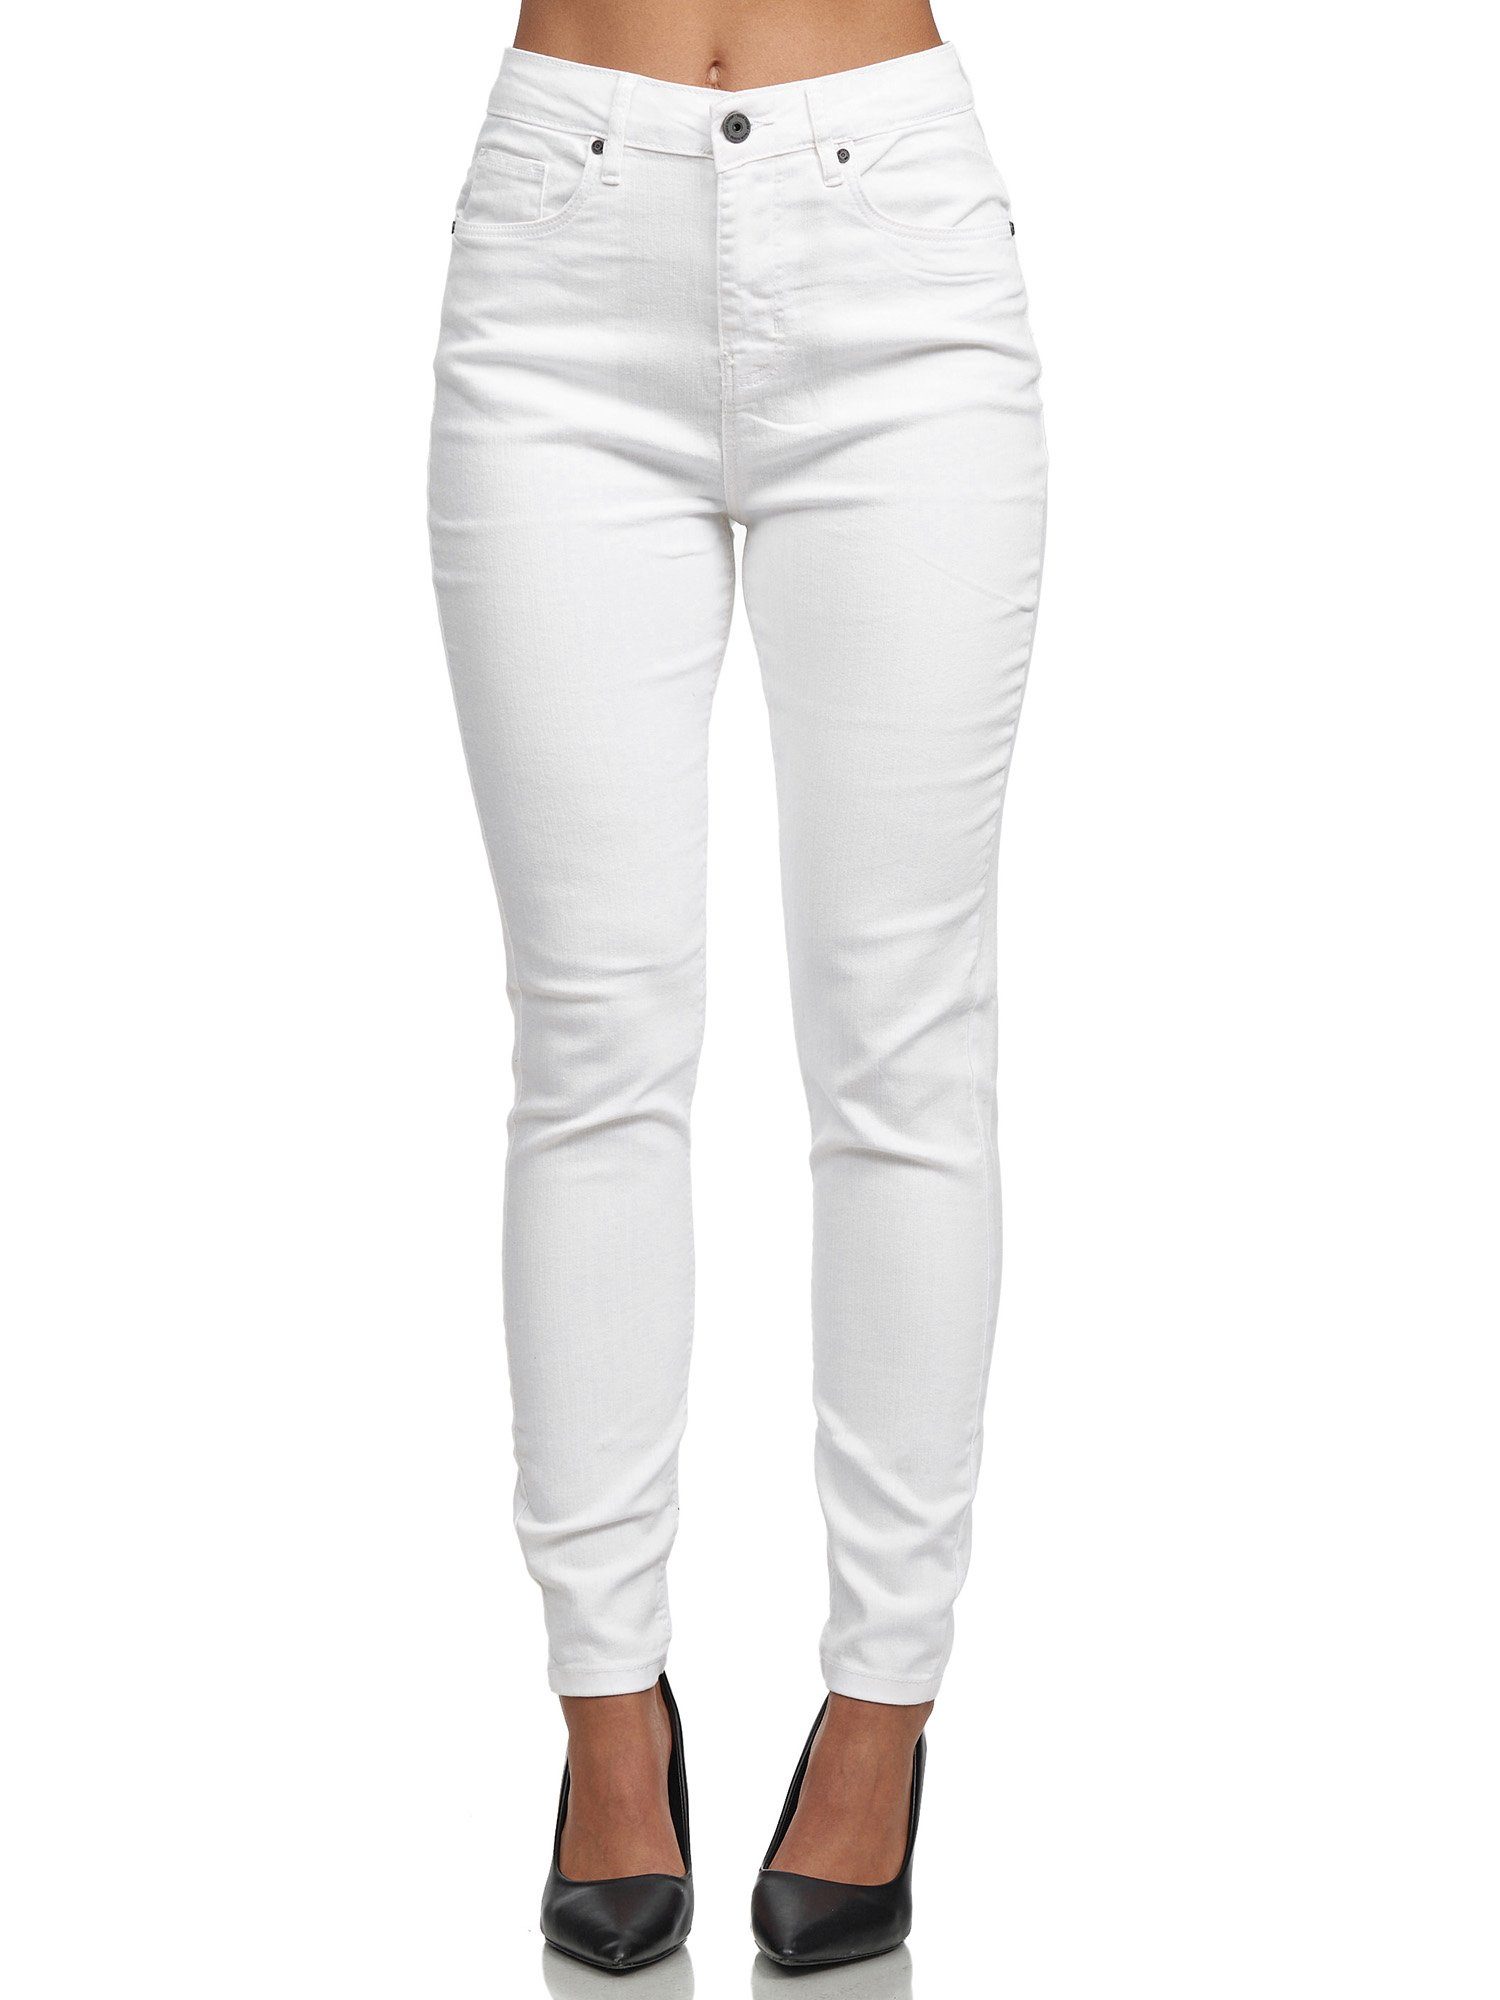 Damen Jeanshose High-waist-Jeans Tazzio F101 weiß Skinny Fit